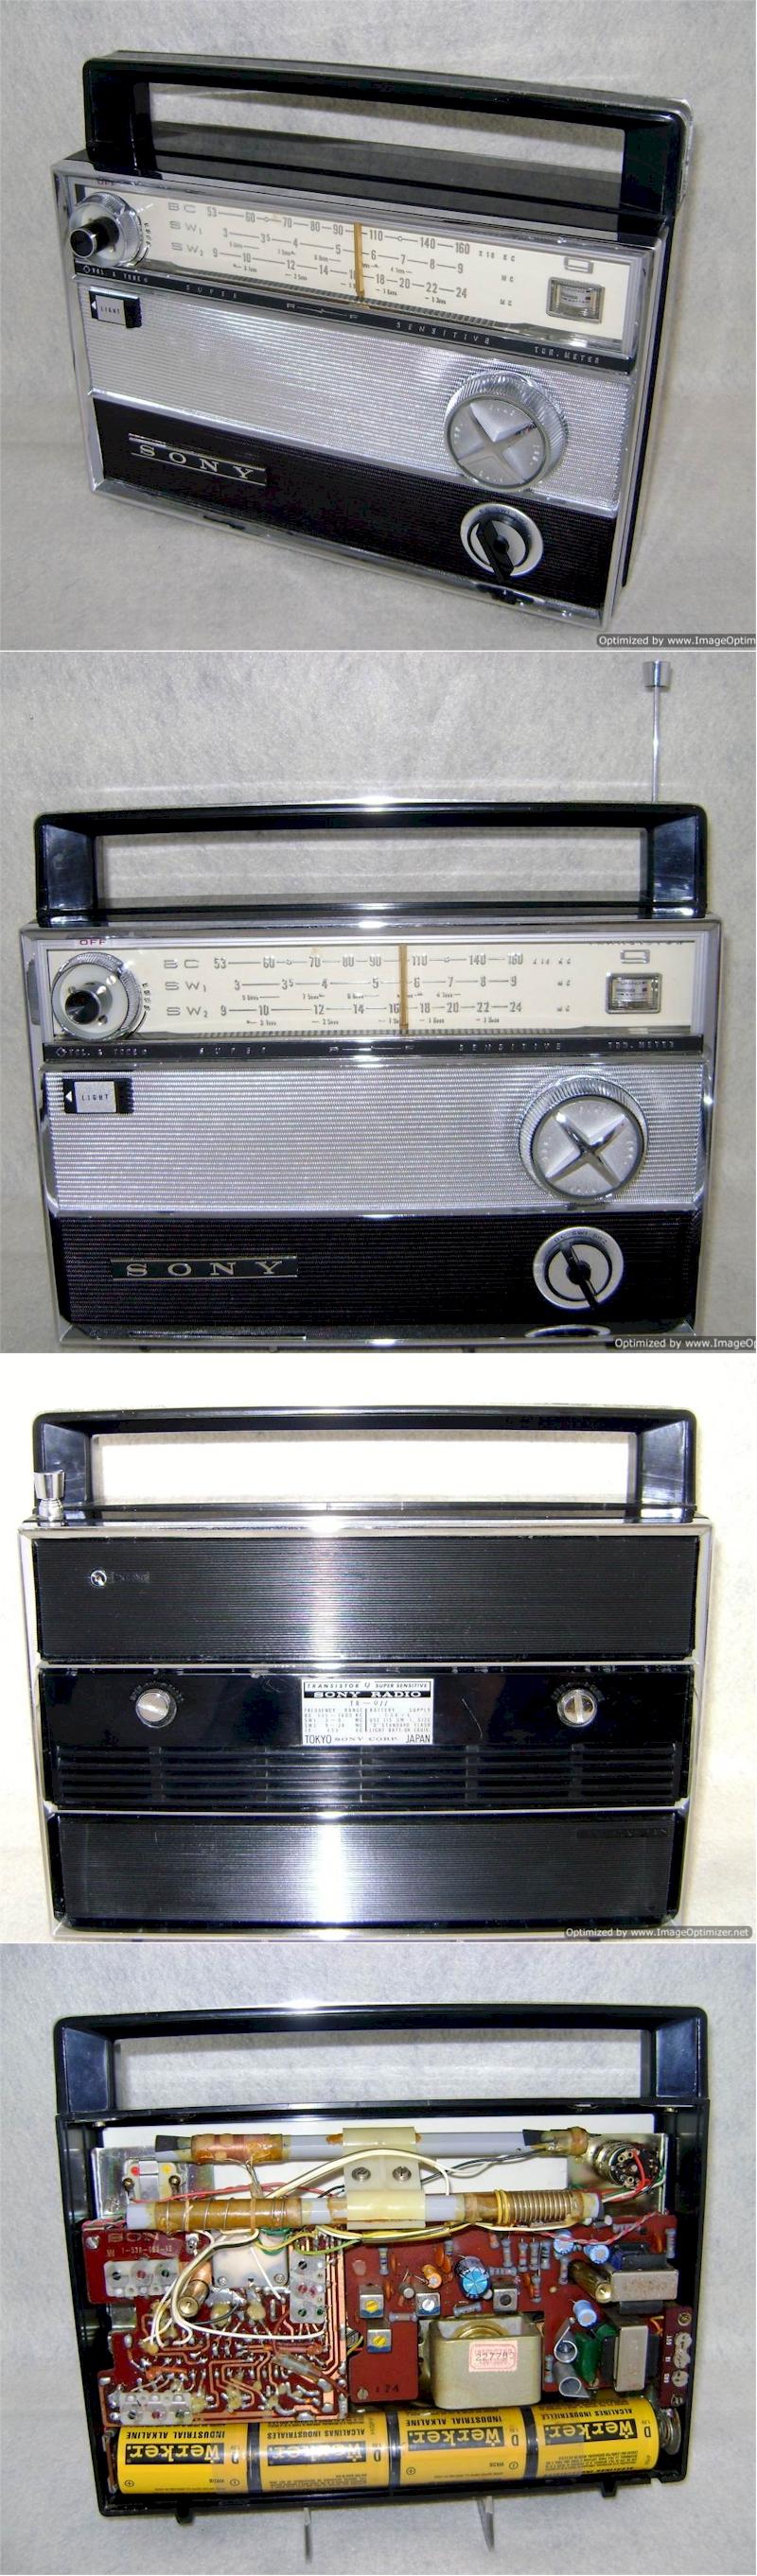 Sony TR-911 Three-Band Portable